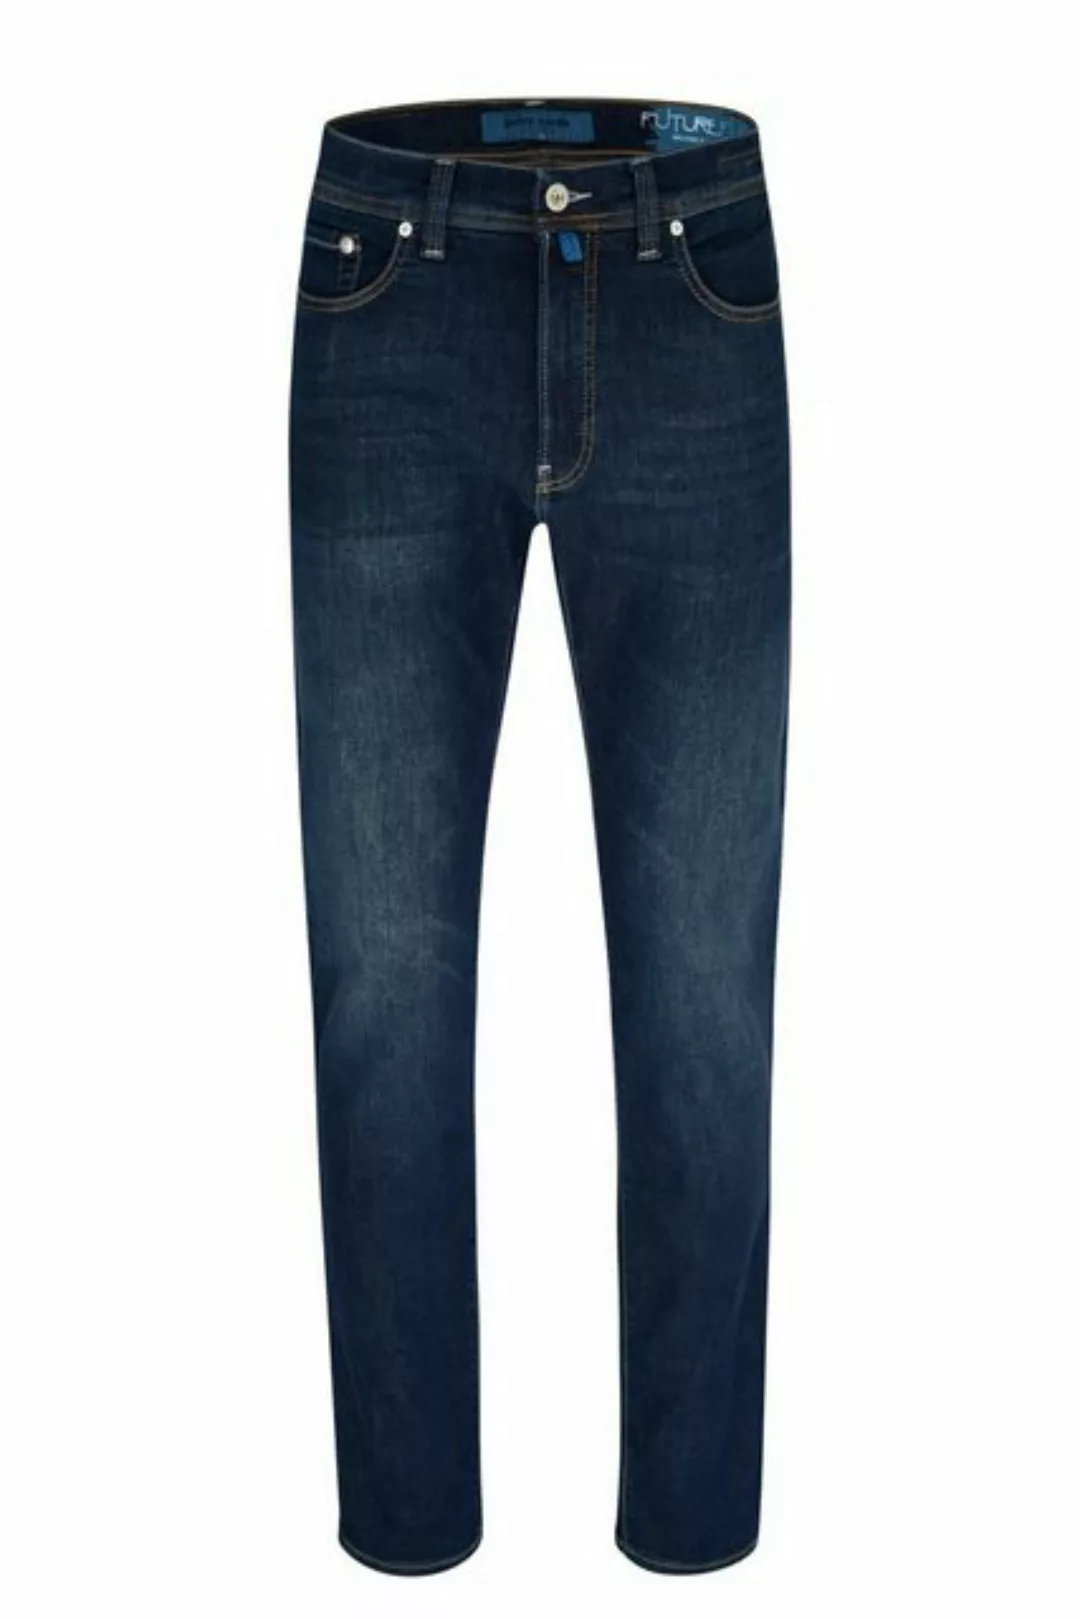 Pierre Cardin 5-Pocket-Jeans PIERRE CARDIN FUTUREFLEX LYON dark blue used 3 günstig online kaufen